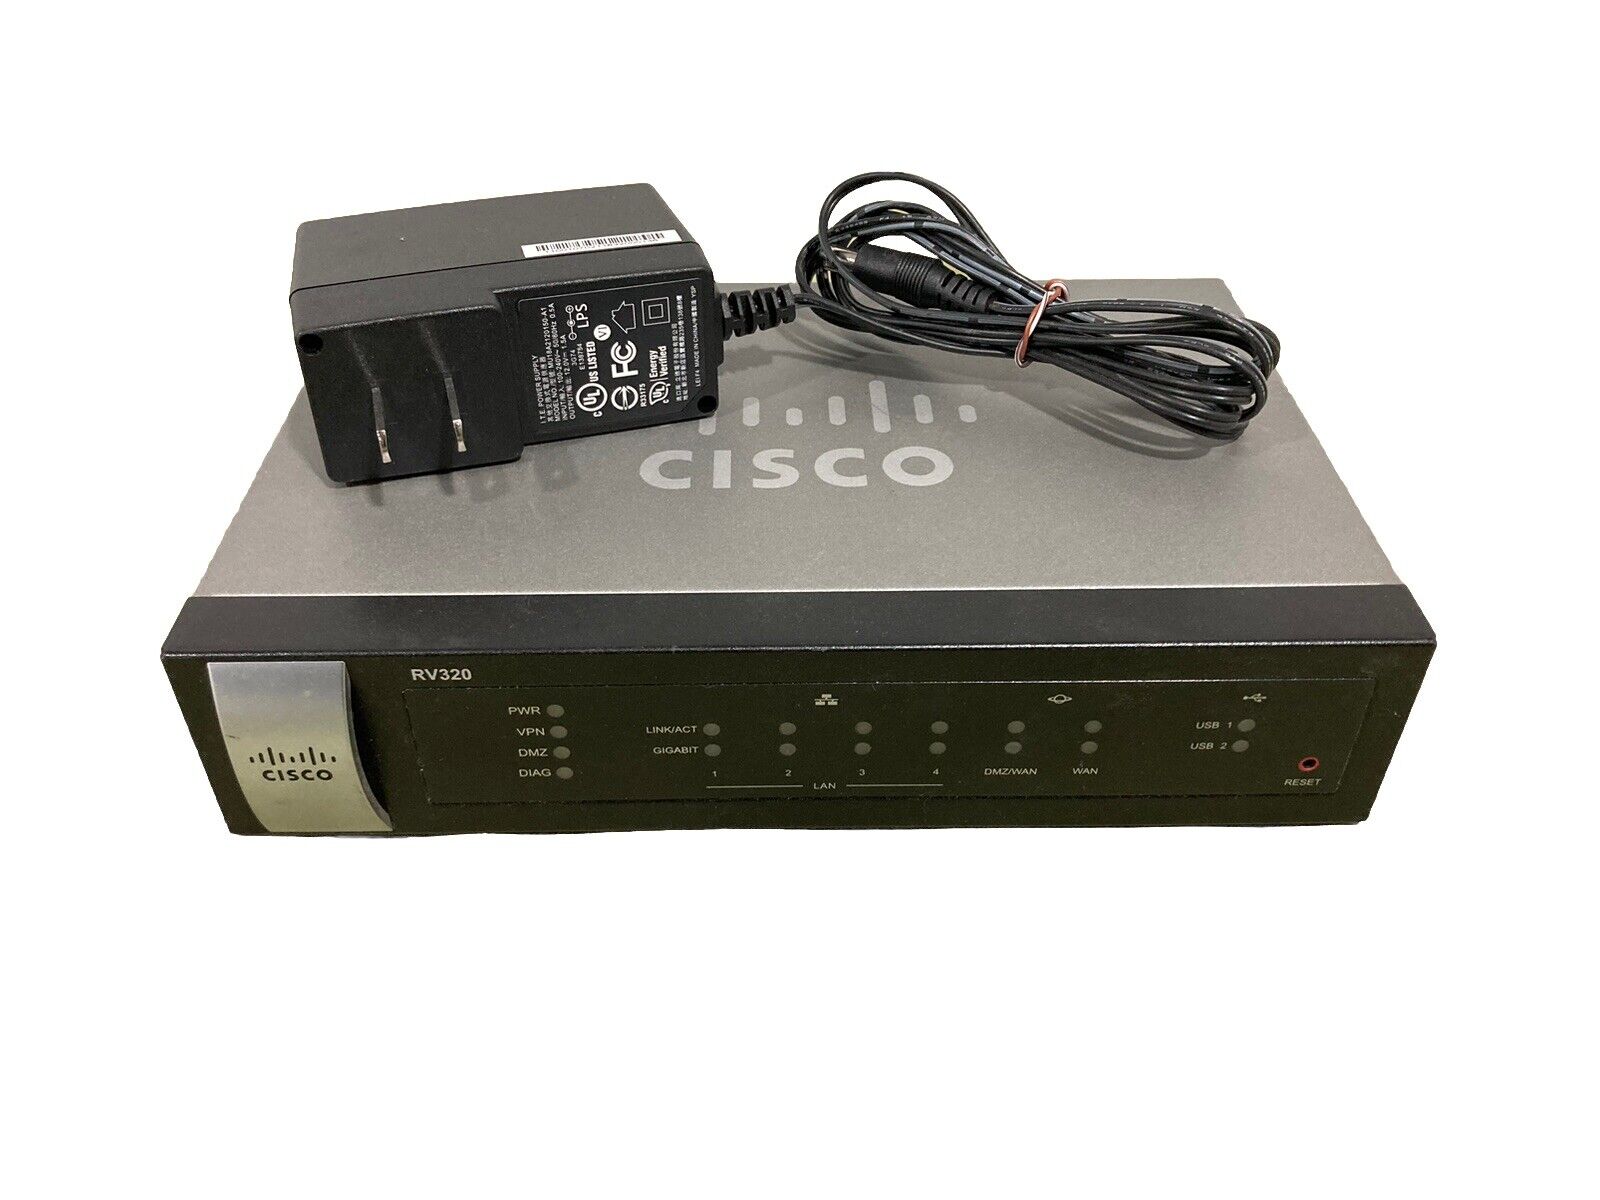 Cisco RV320 Gigabit Dual WAN VPN Router RV320 w/ Power Adapter   g100